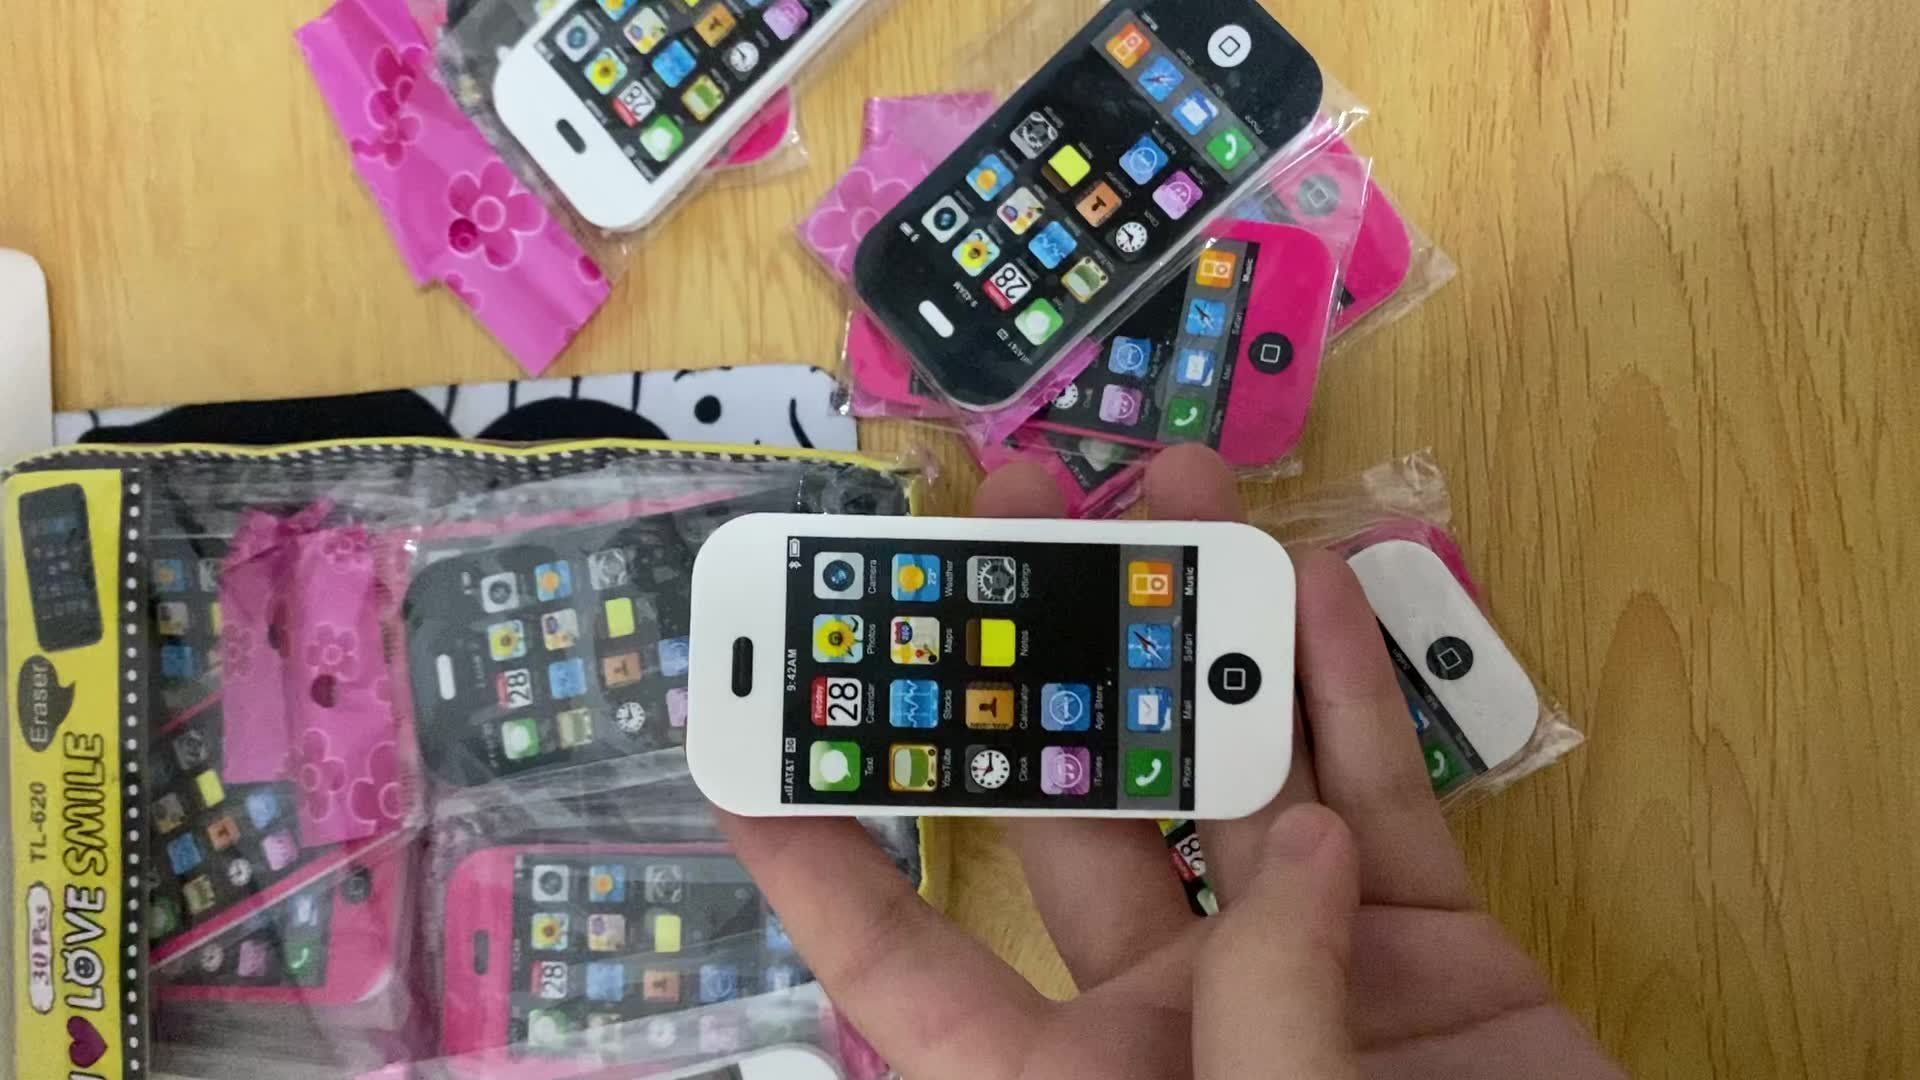 Fun Erasers: Smart Phone Erasers